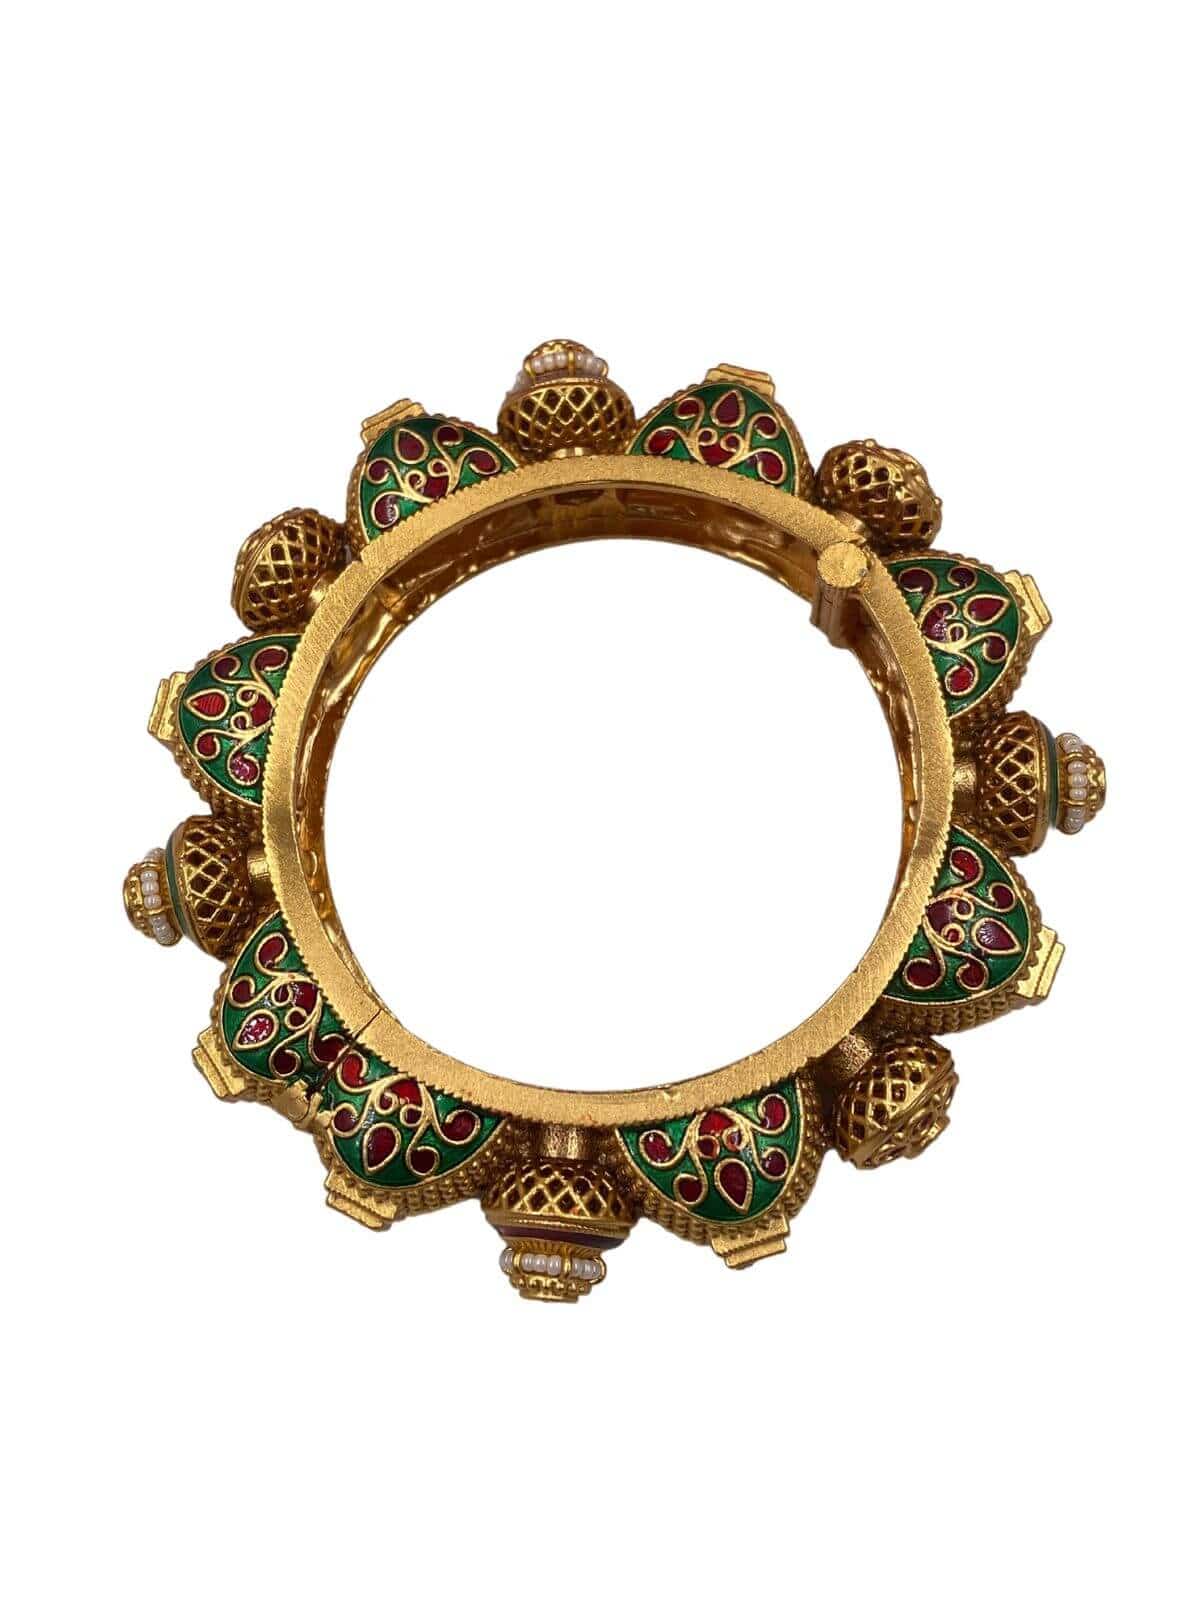 Multi Color Rajasthani Meenakari Gokhru Pacheli Bangles Set Antique Golden Bangles